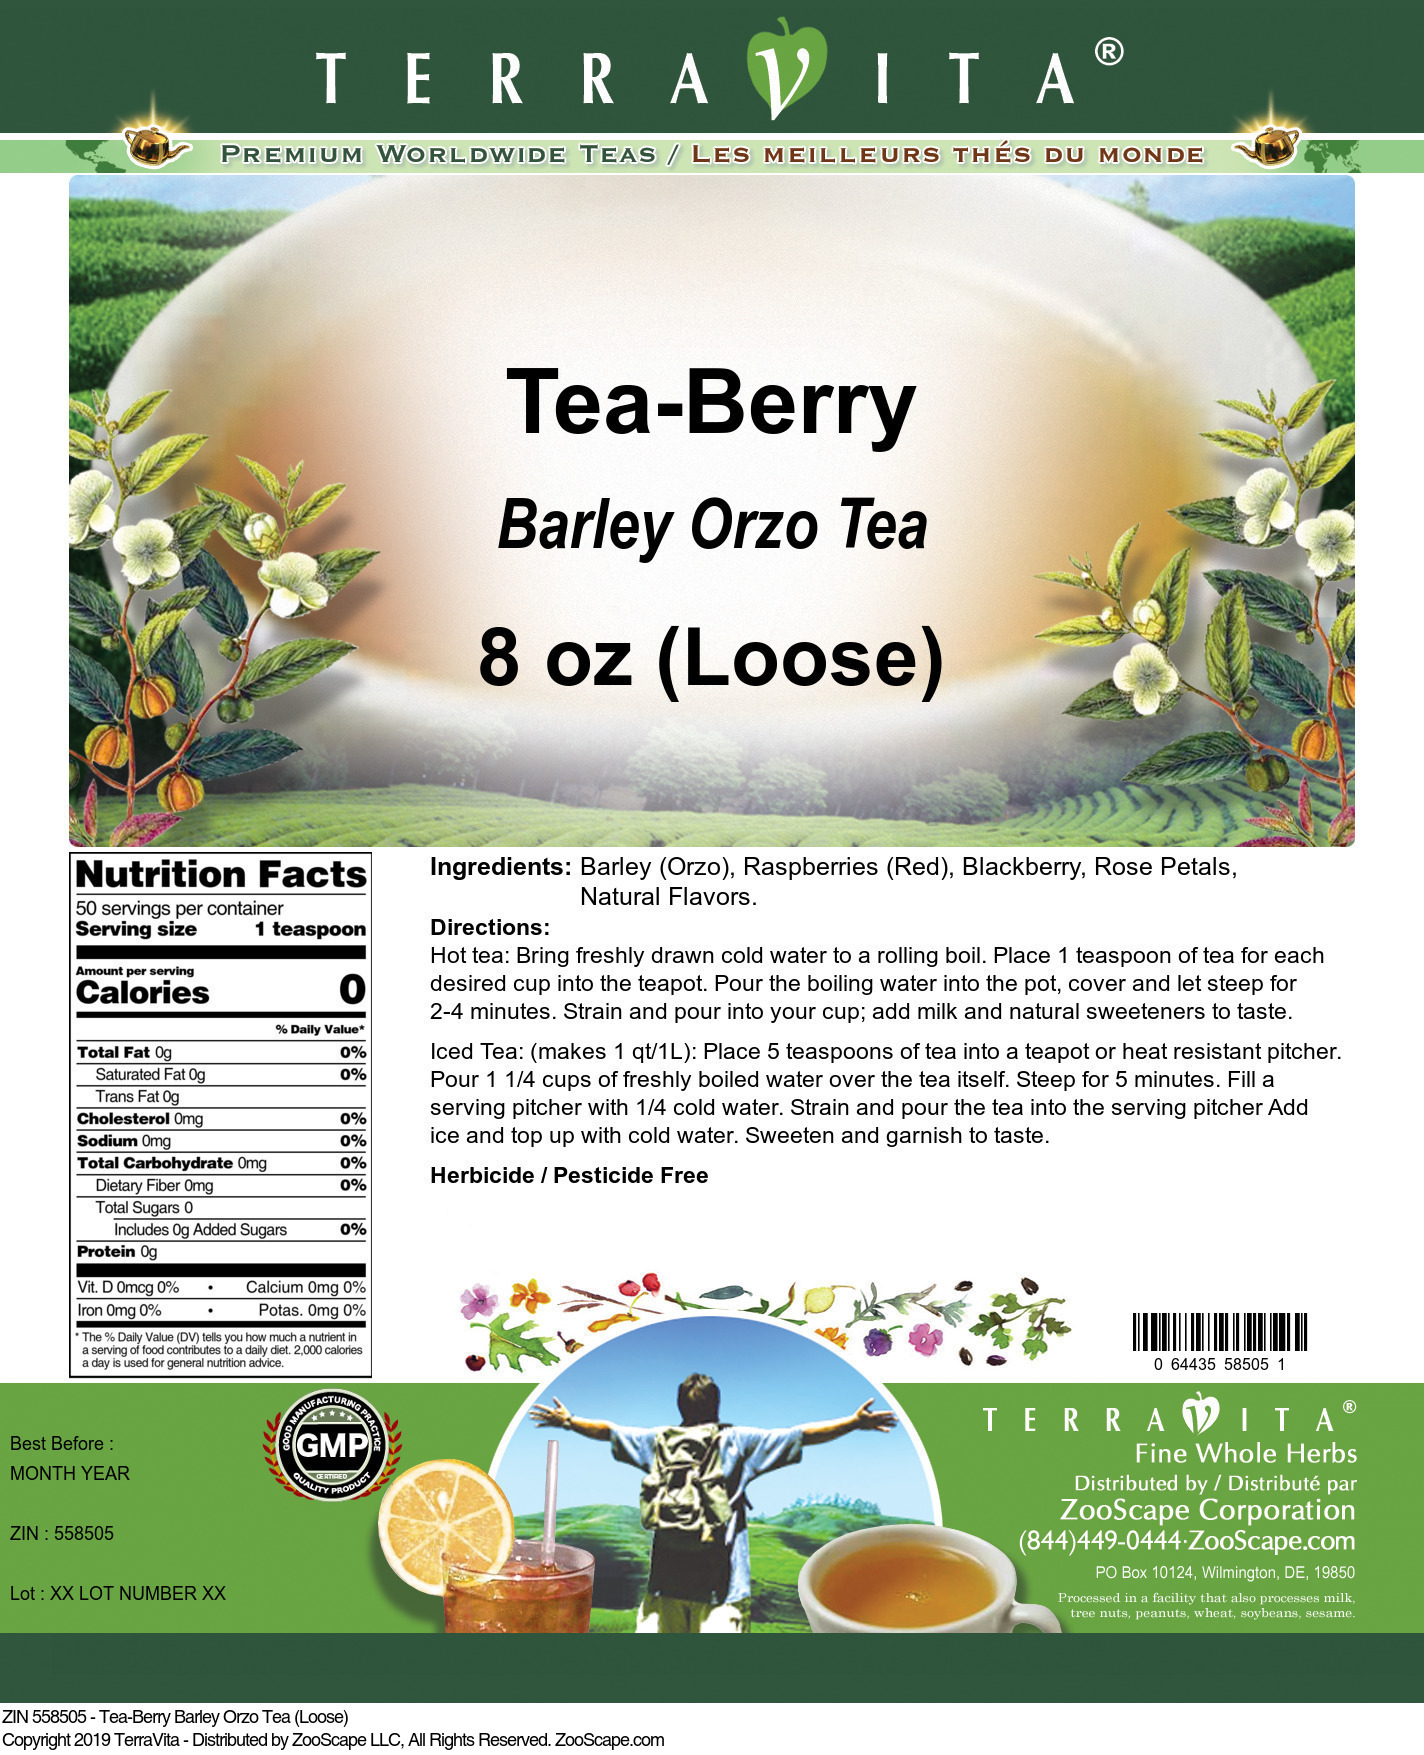 Tea-Berry Barley Orzo Tea (Loose) - Label